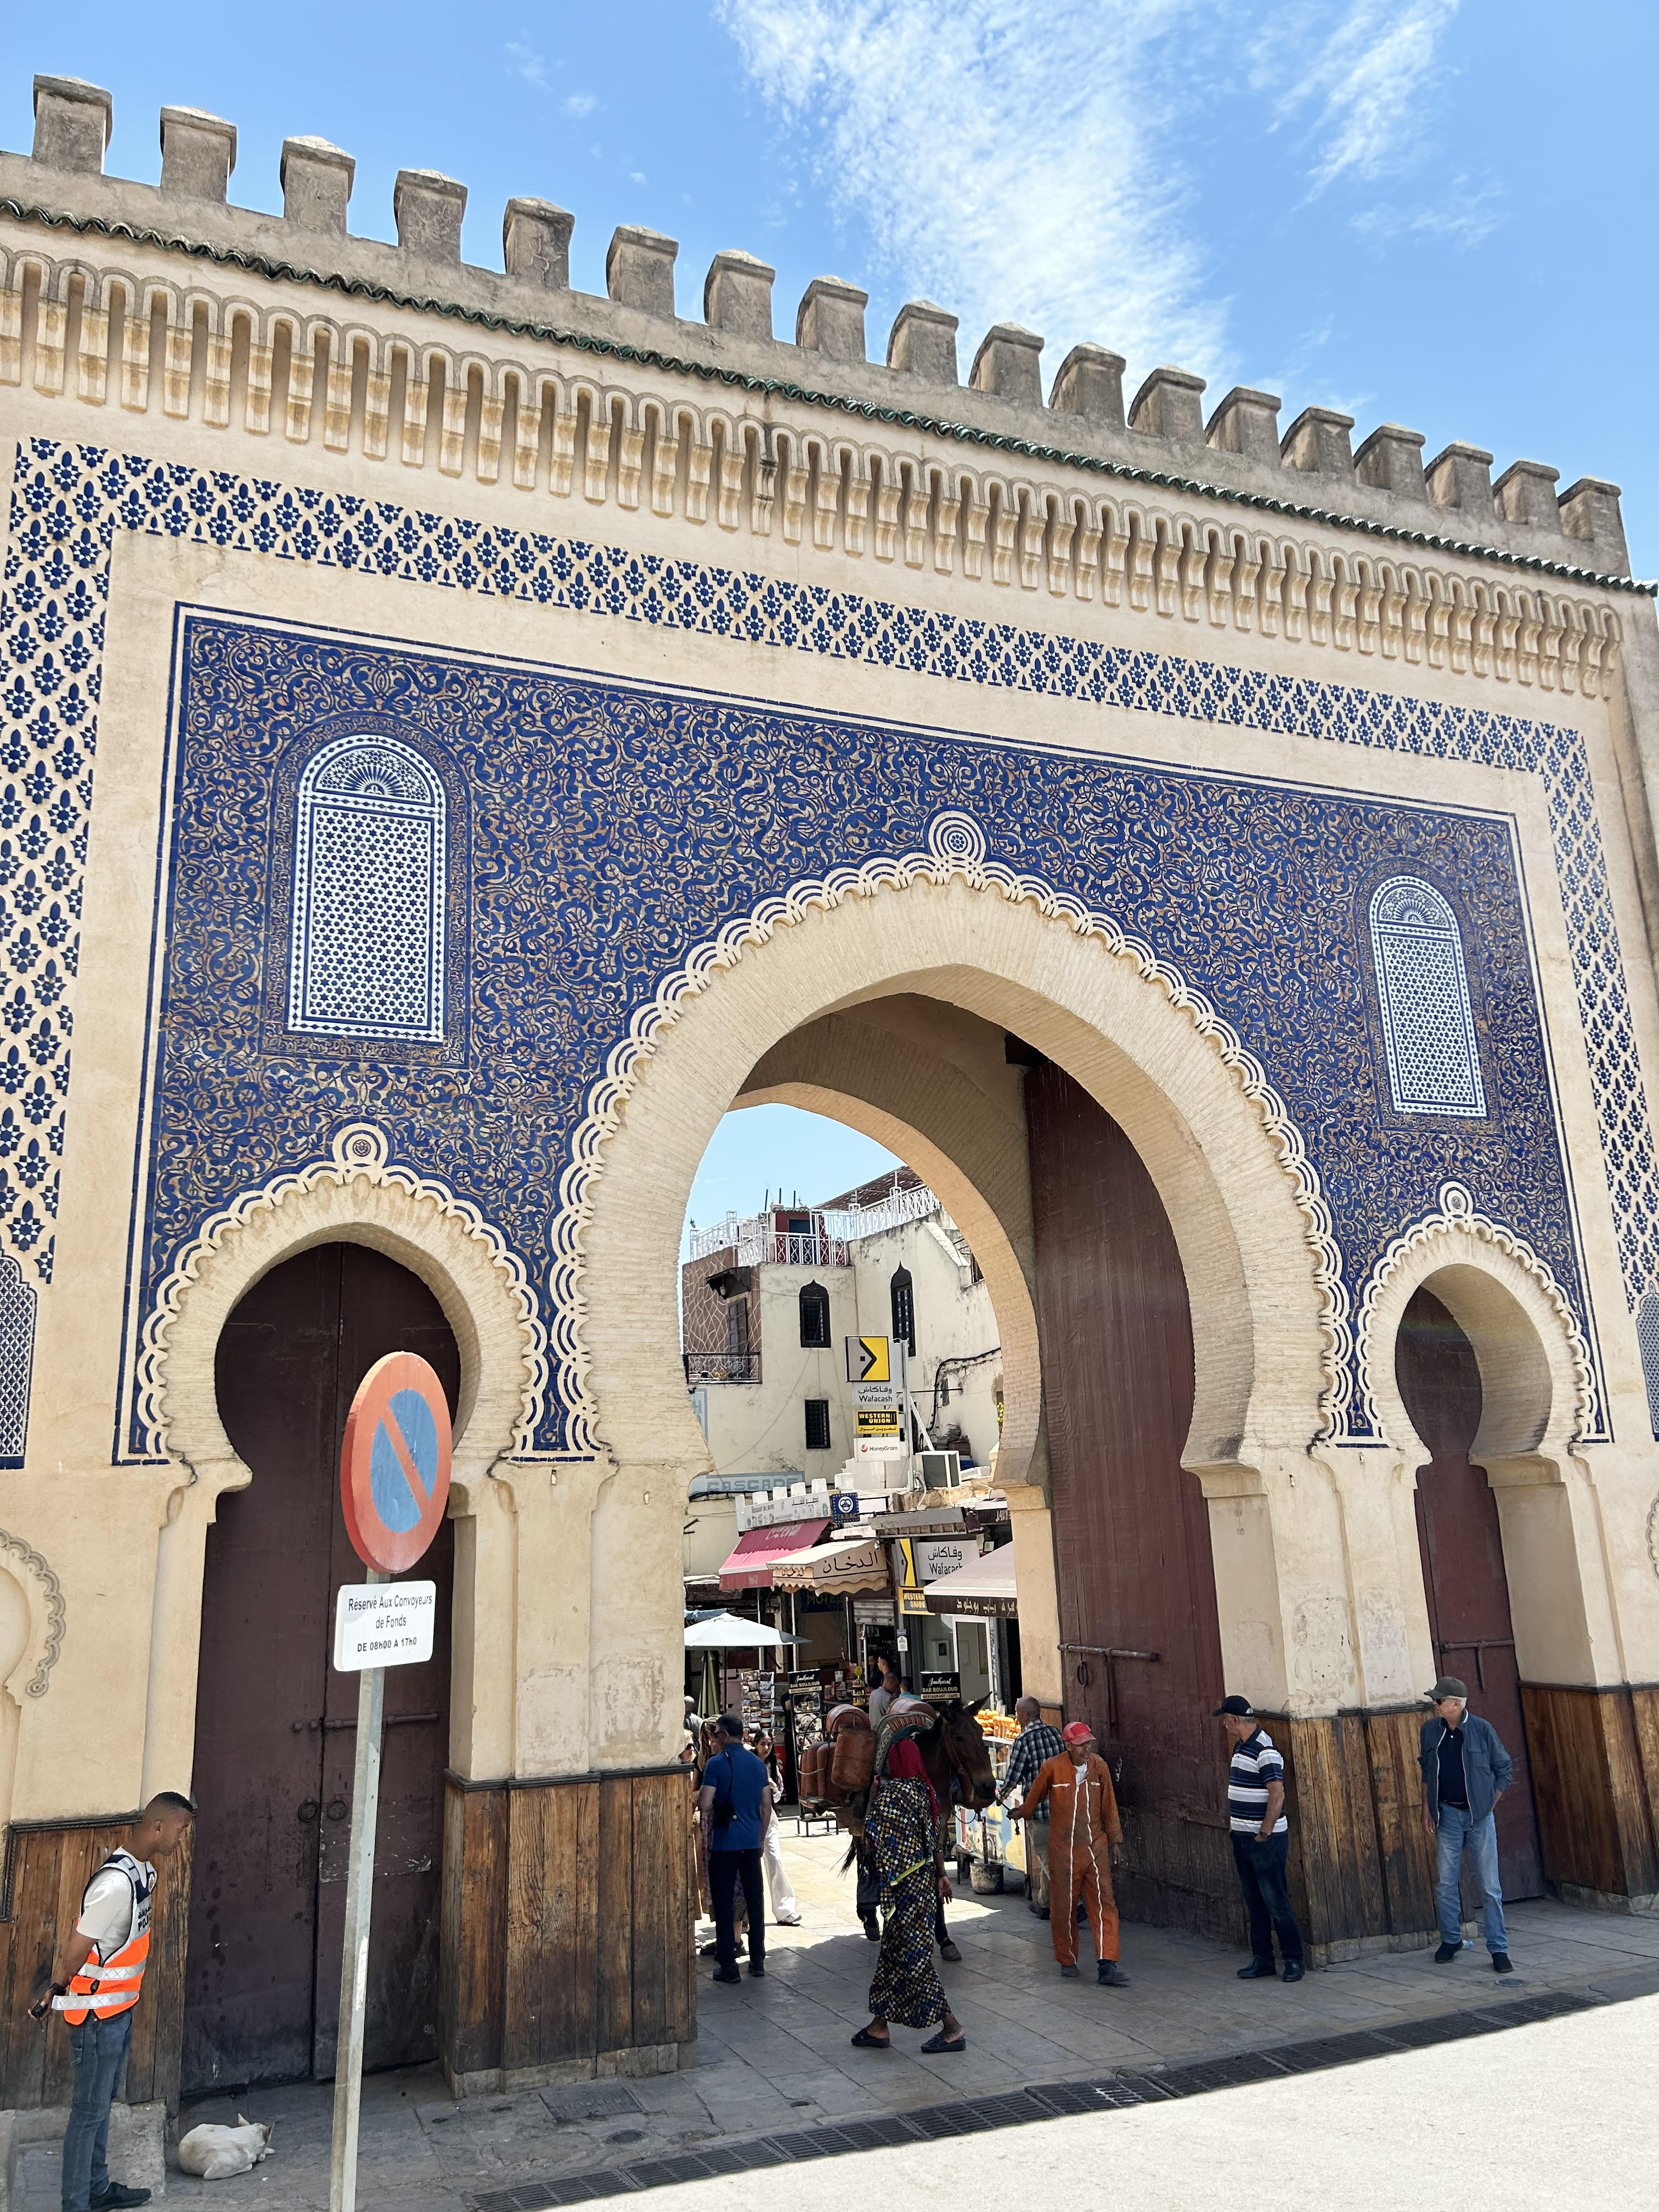 Building in Morocco.